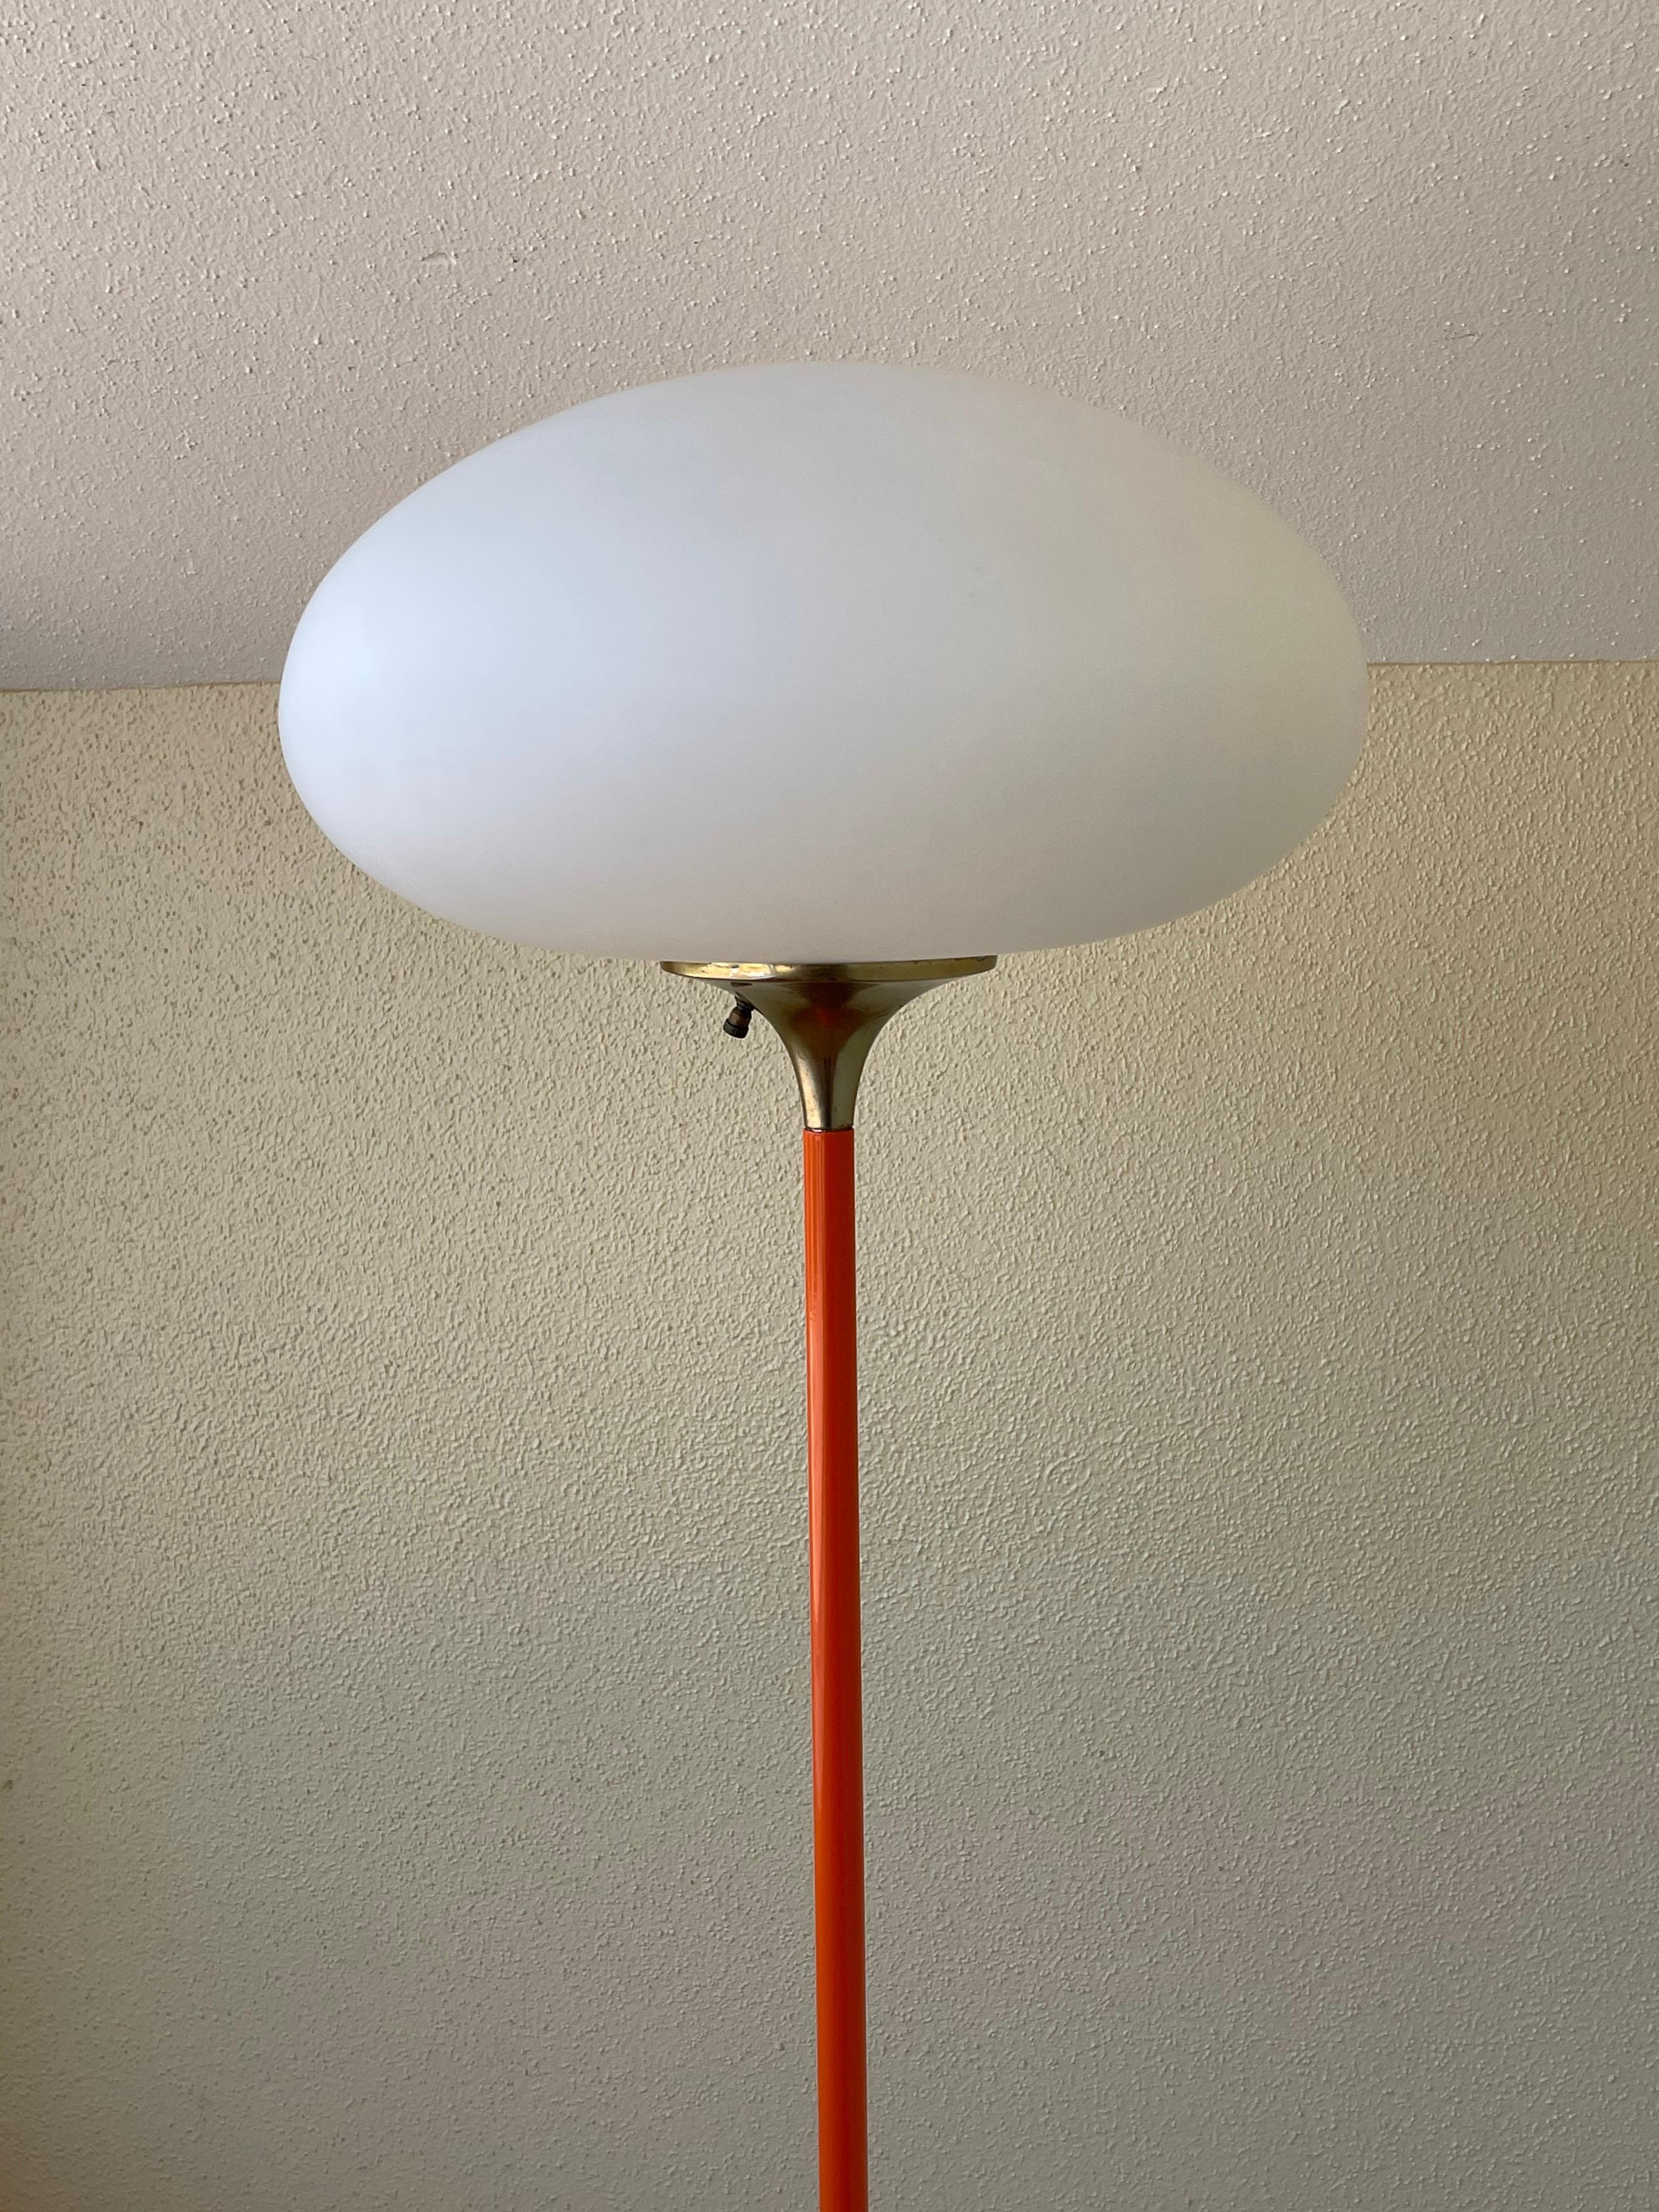 Iconic Space Age Laurel Lighting Mushroom Floor Lamp in Orange & Brass In Good Condition In San Diego, CA